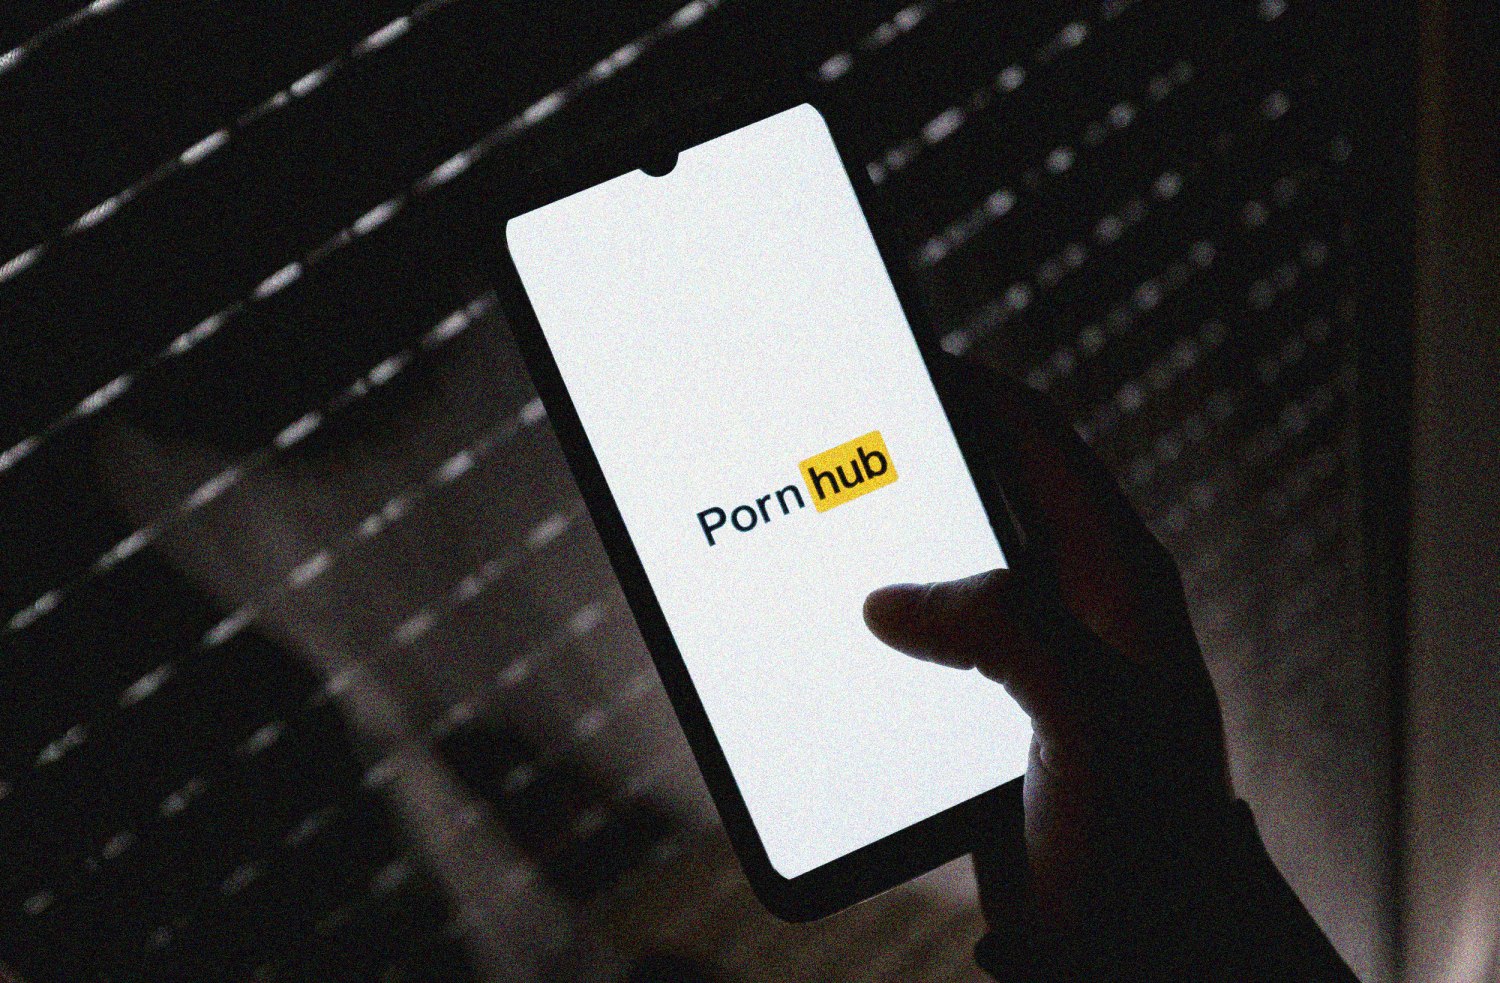 Porn Hub - Meet Pornhub's new owner: Ethical Capital Partners